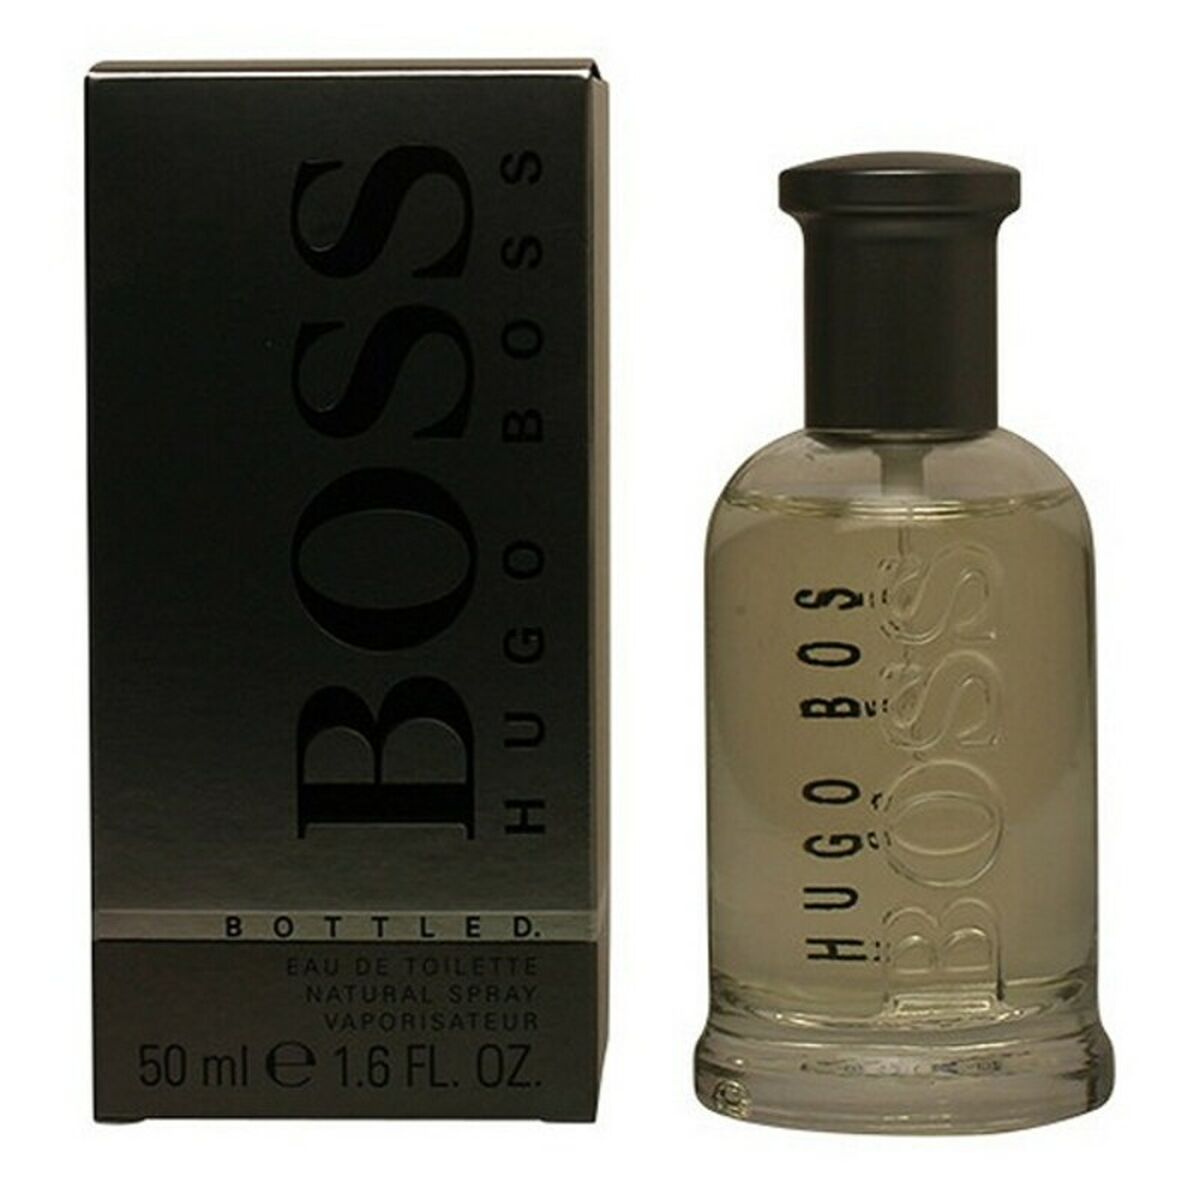 Hugo Boss Bottled мужские 200ml. Hugo Boss Boss №6, 100 ml. Boss Hugo Boss EDT 50 ml. Мужские духи Hugo Boss "№6". Духи босс отзывы